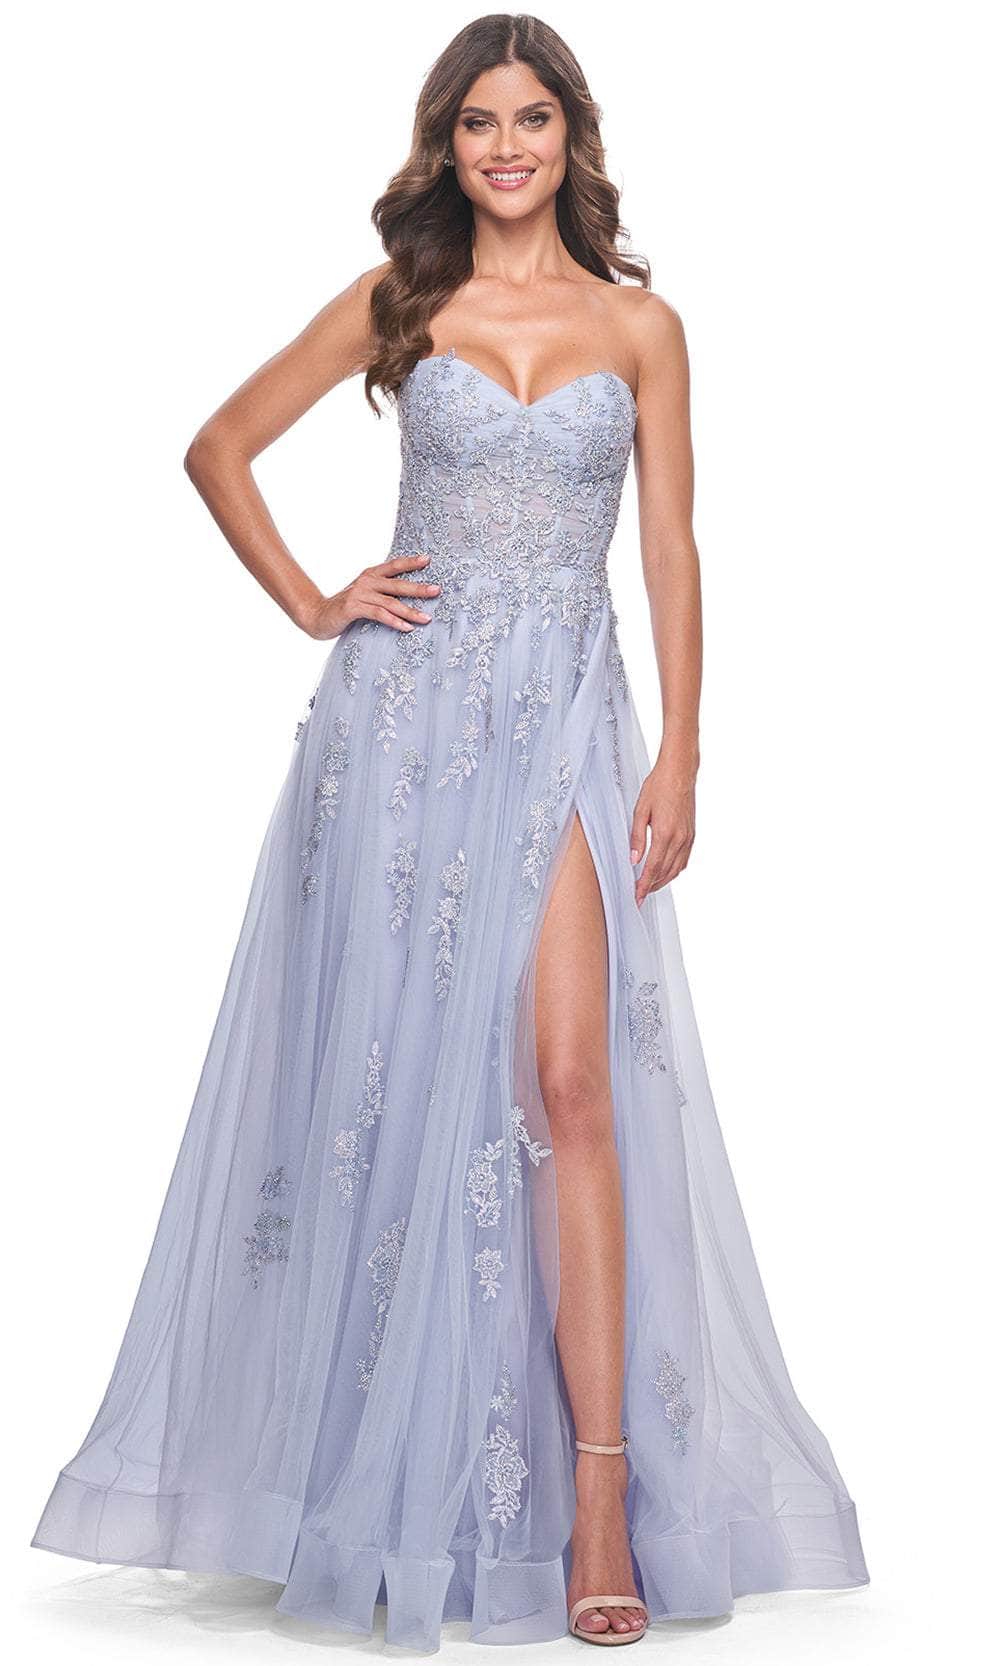 La Femme 32084 - Strapless Lace Prom Dress Prom Dresses 00 / Light Periwinkle